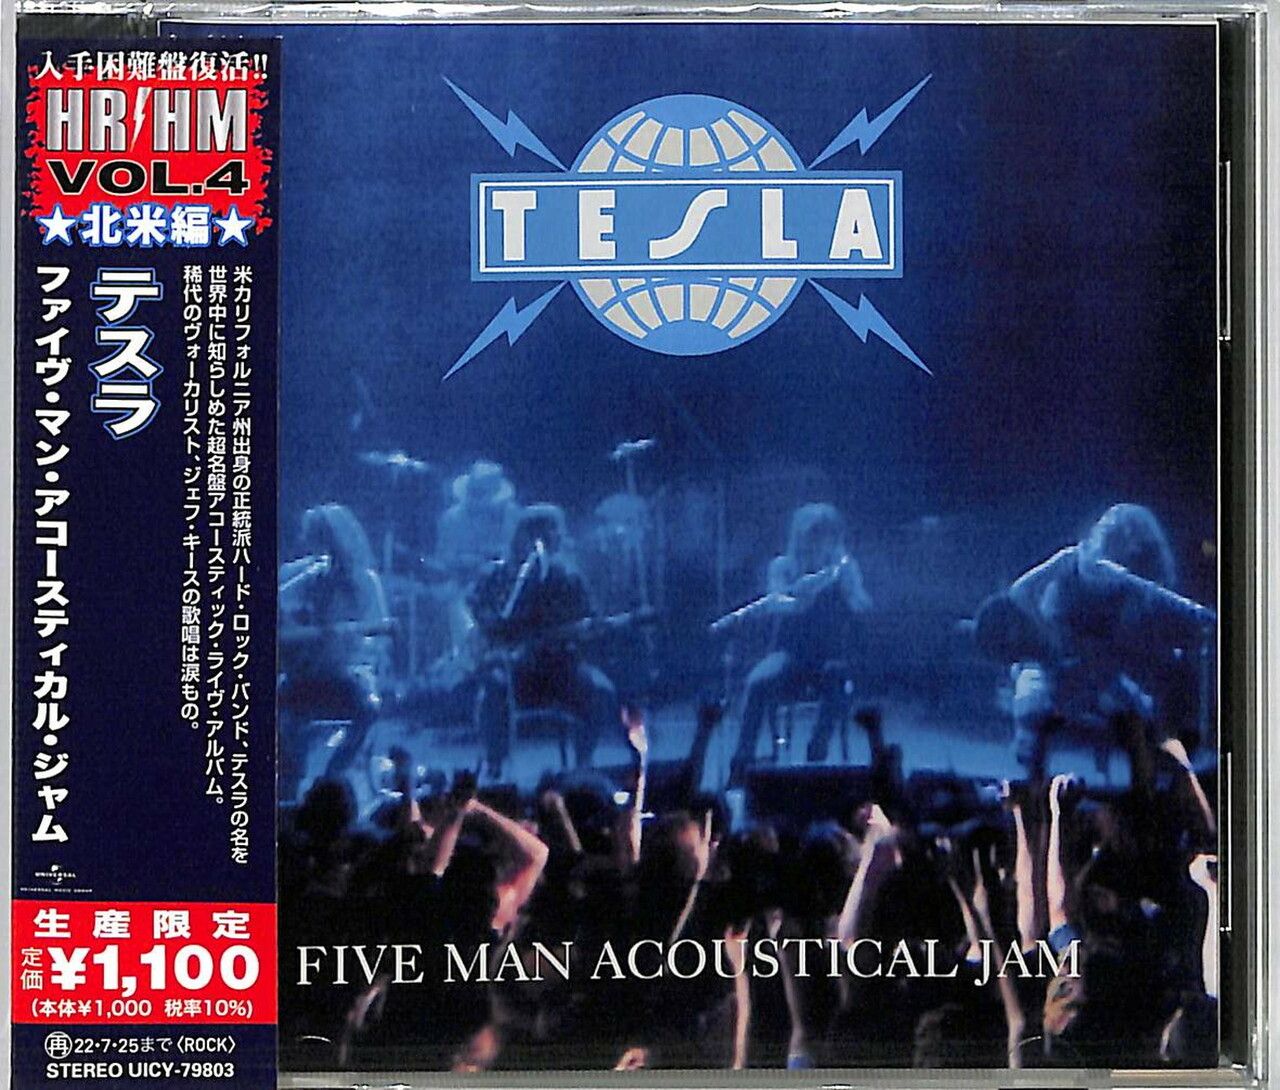 Tesla - Five Man Acoustical Jam (2022 Jap. reissue) - CD - New